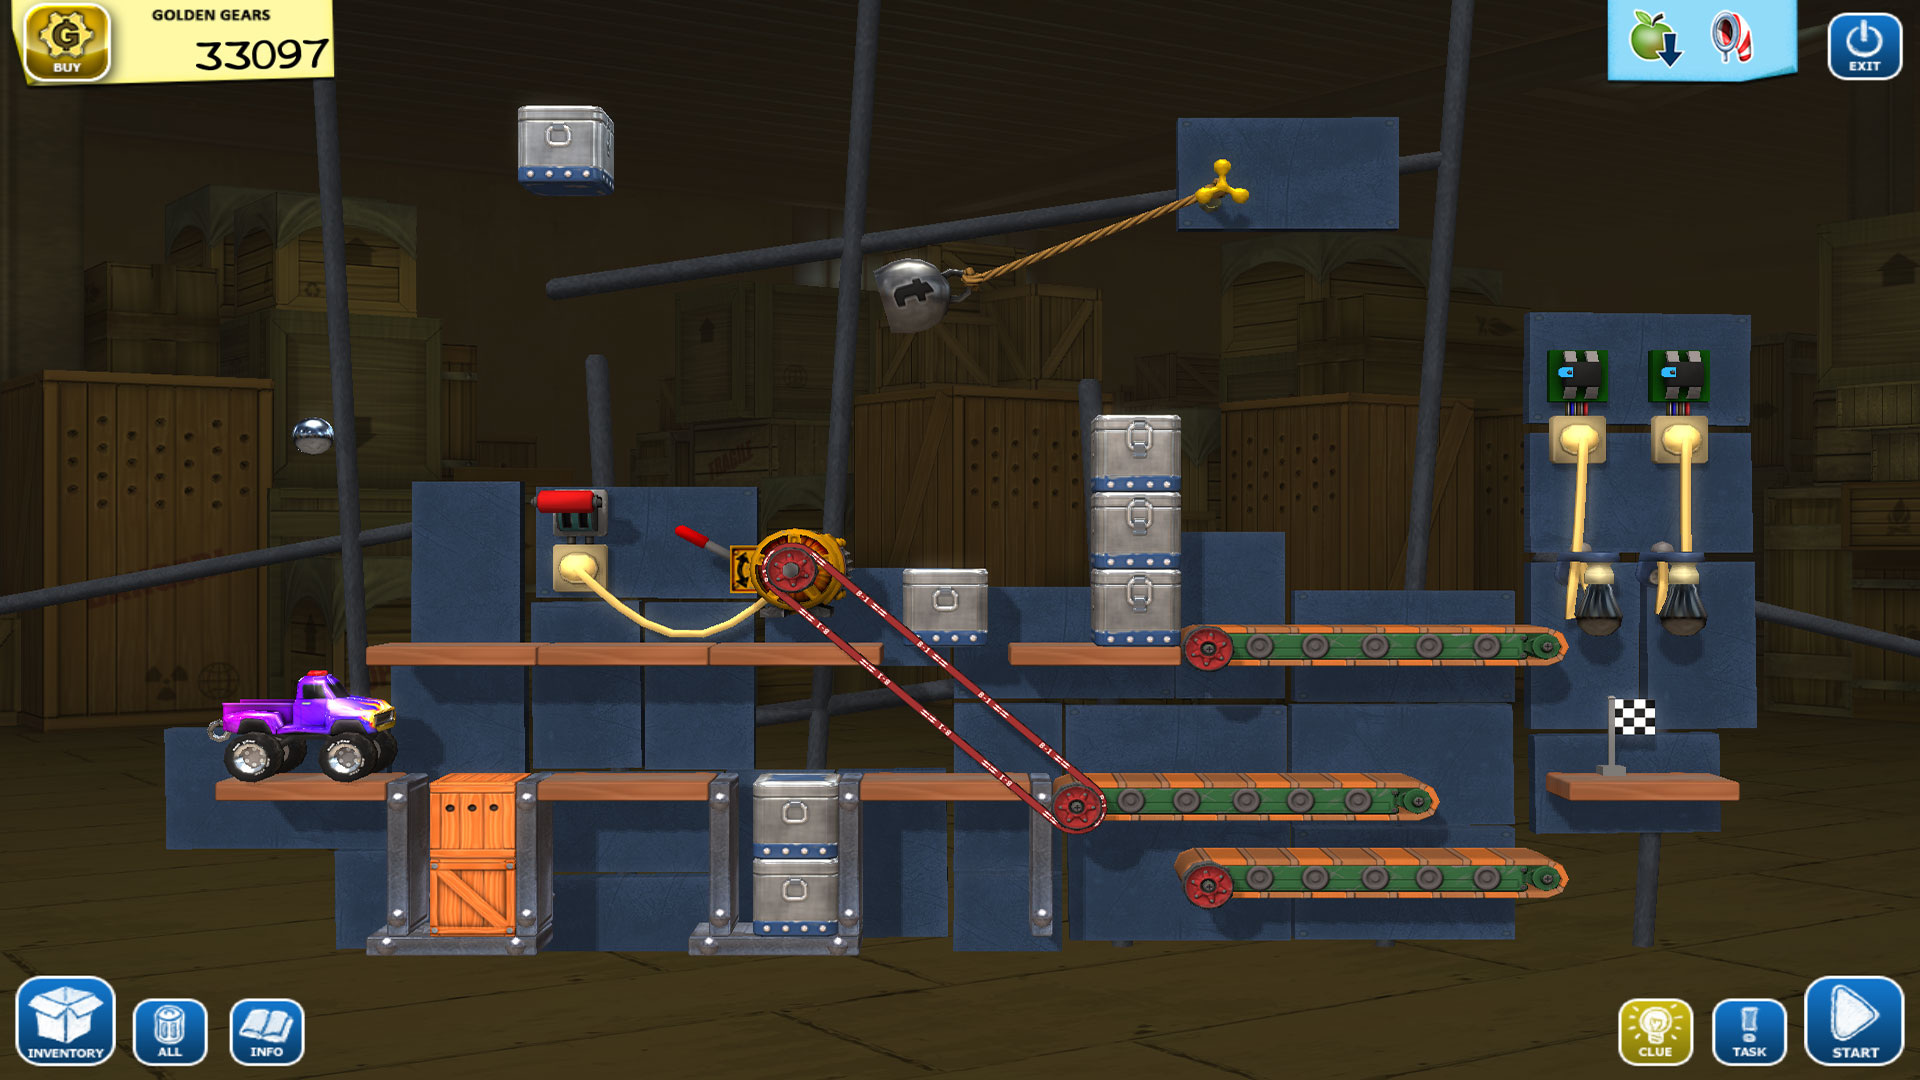 Crazy Machines: Golden Gears screenshot